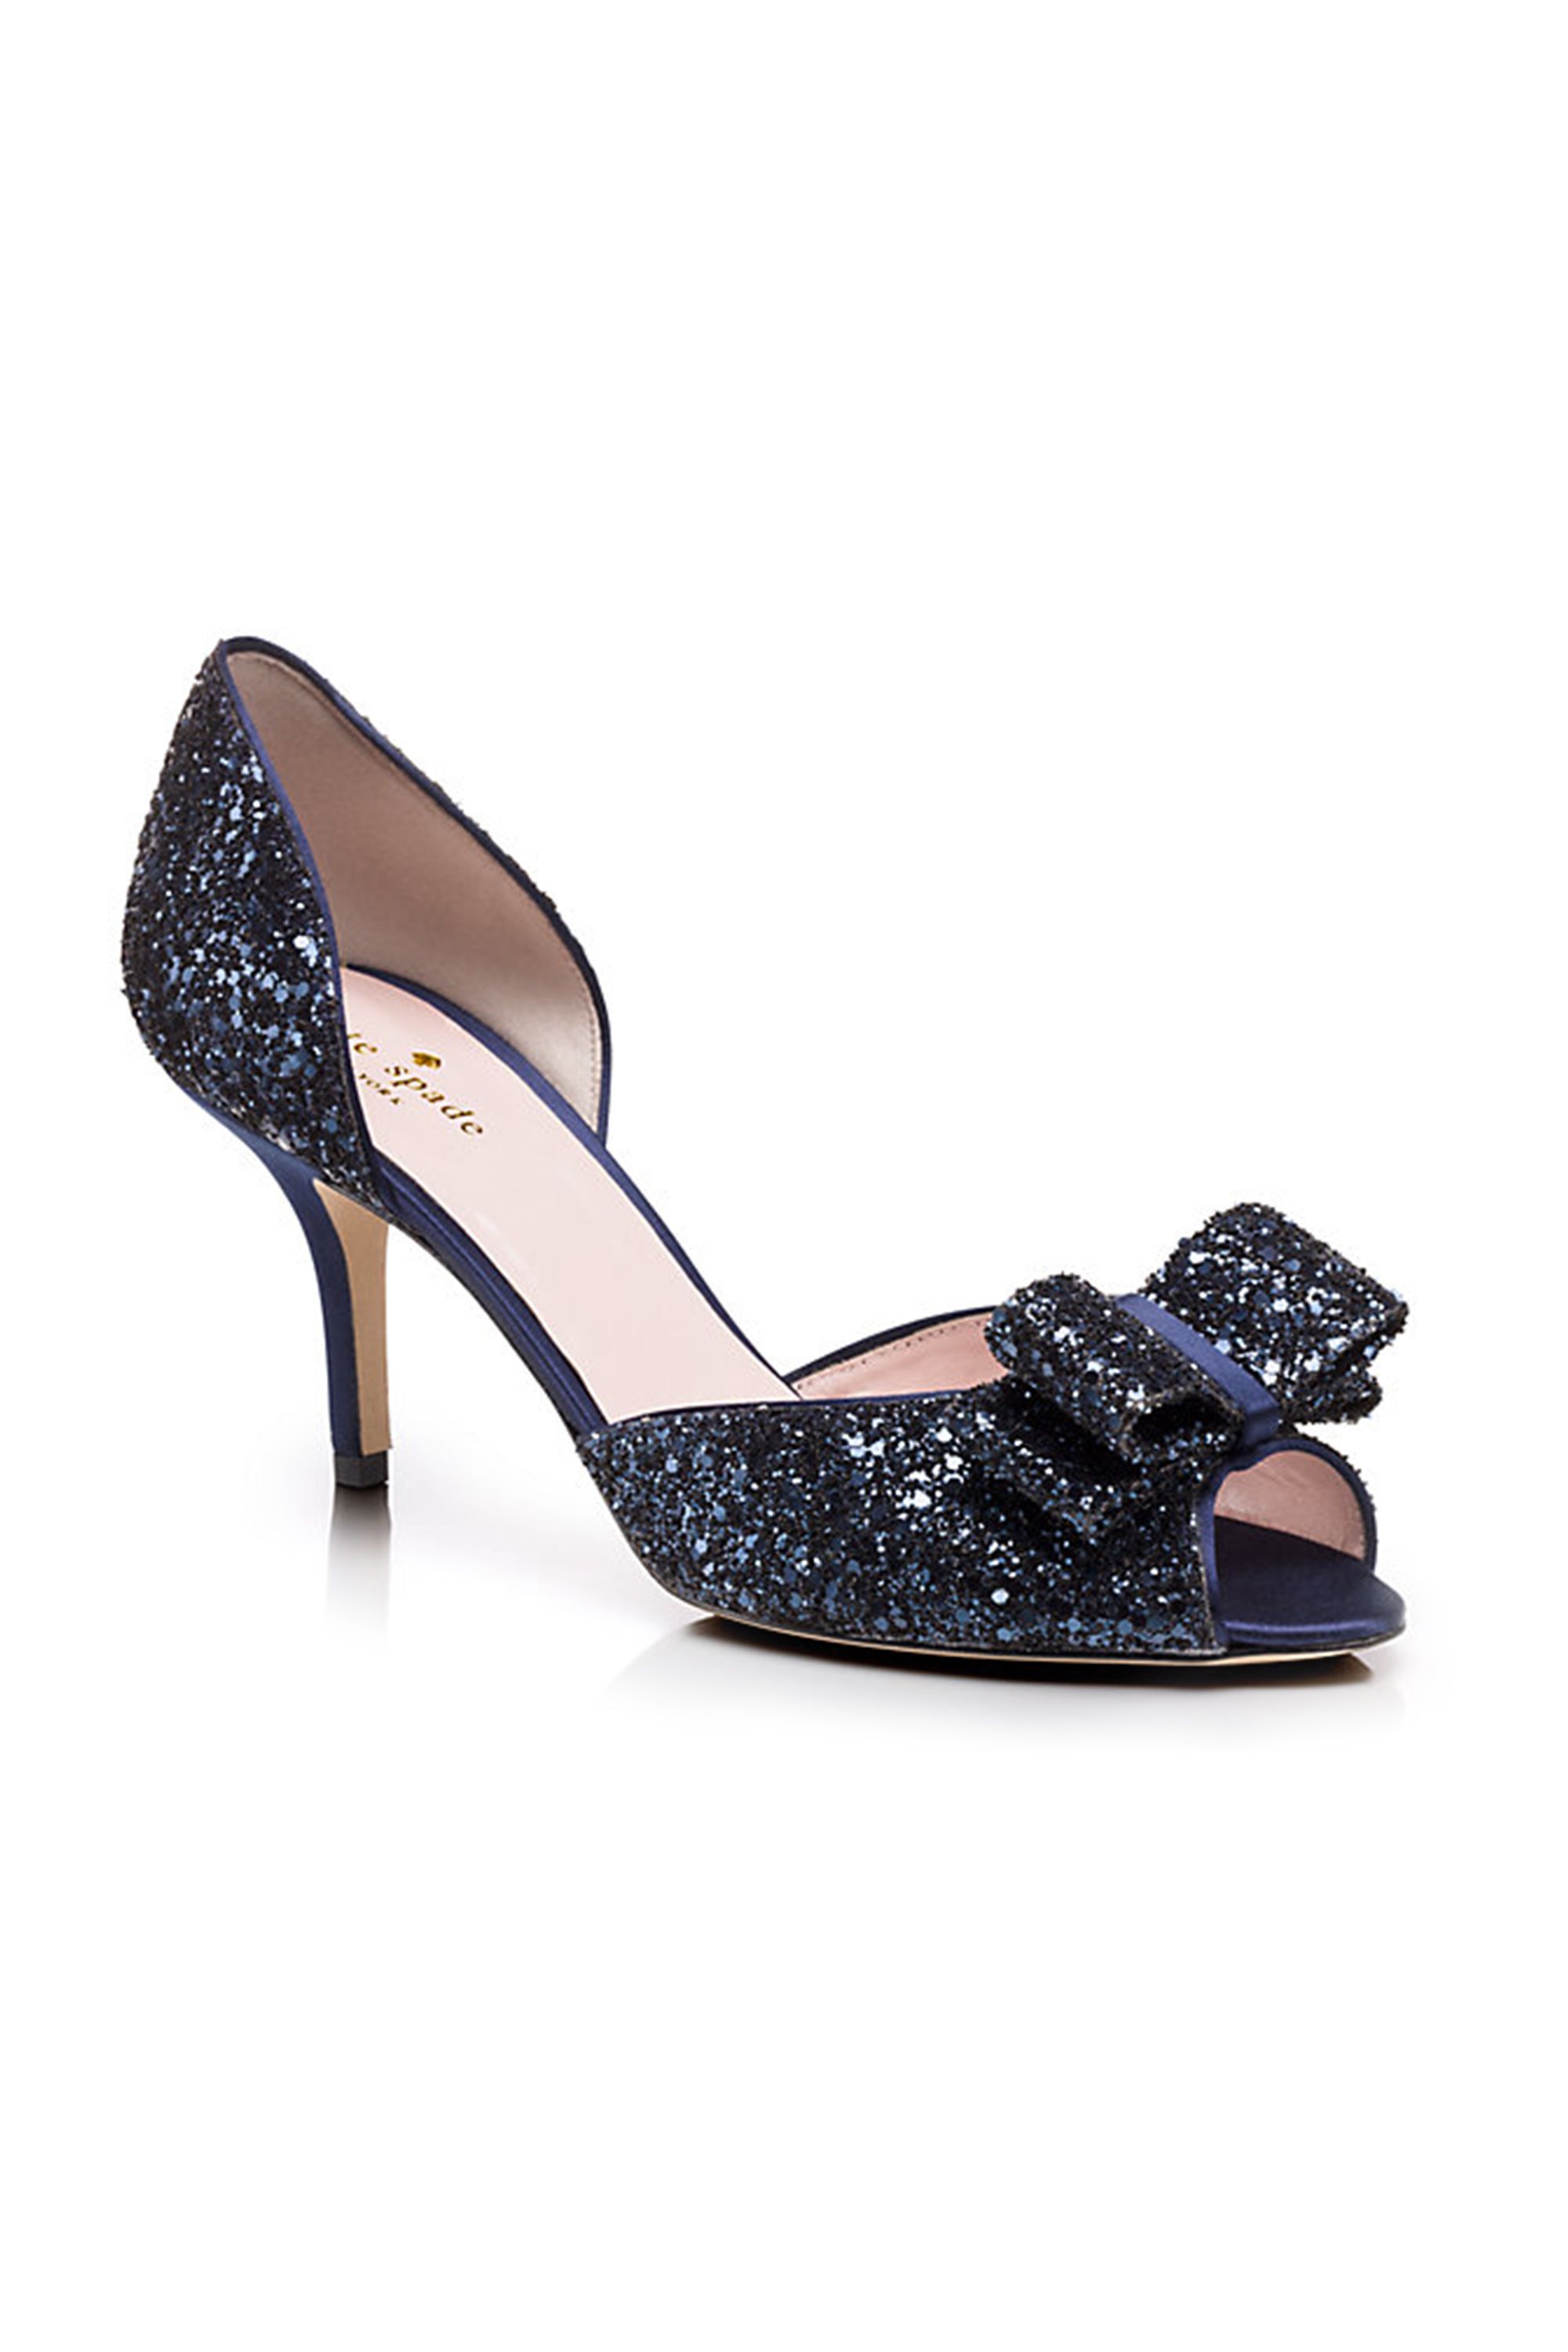 Details more than 158 blue glitter heels for wedding super hot ...